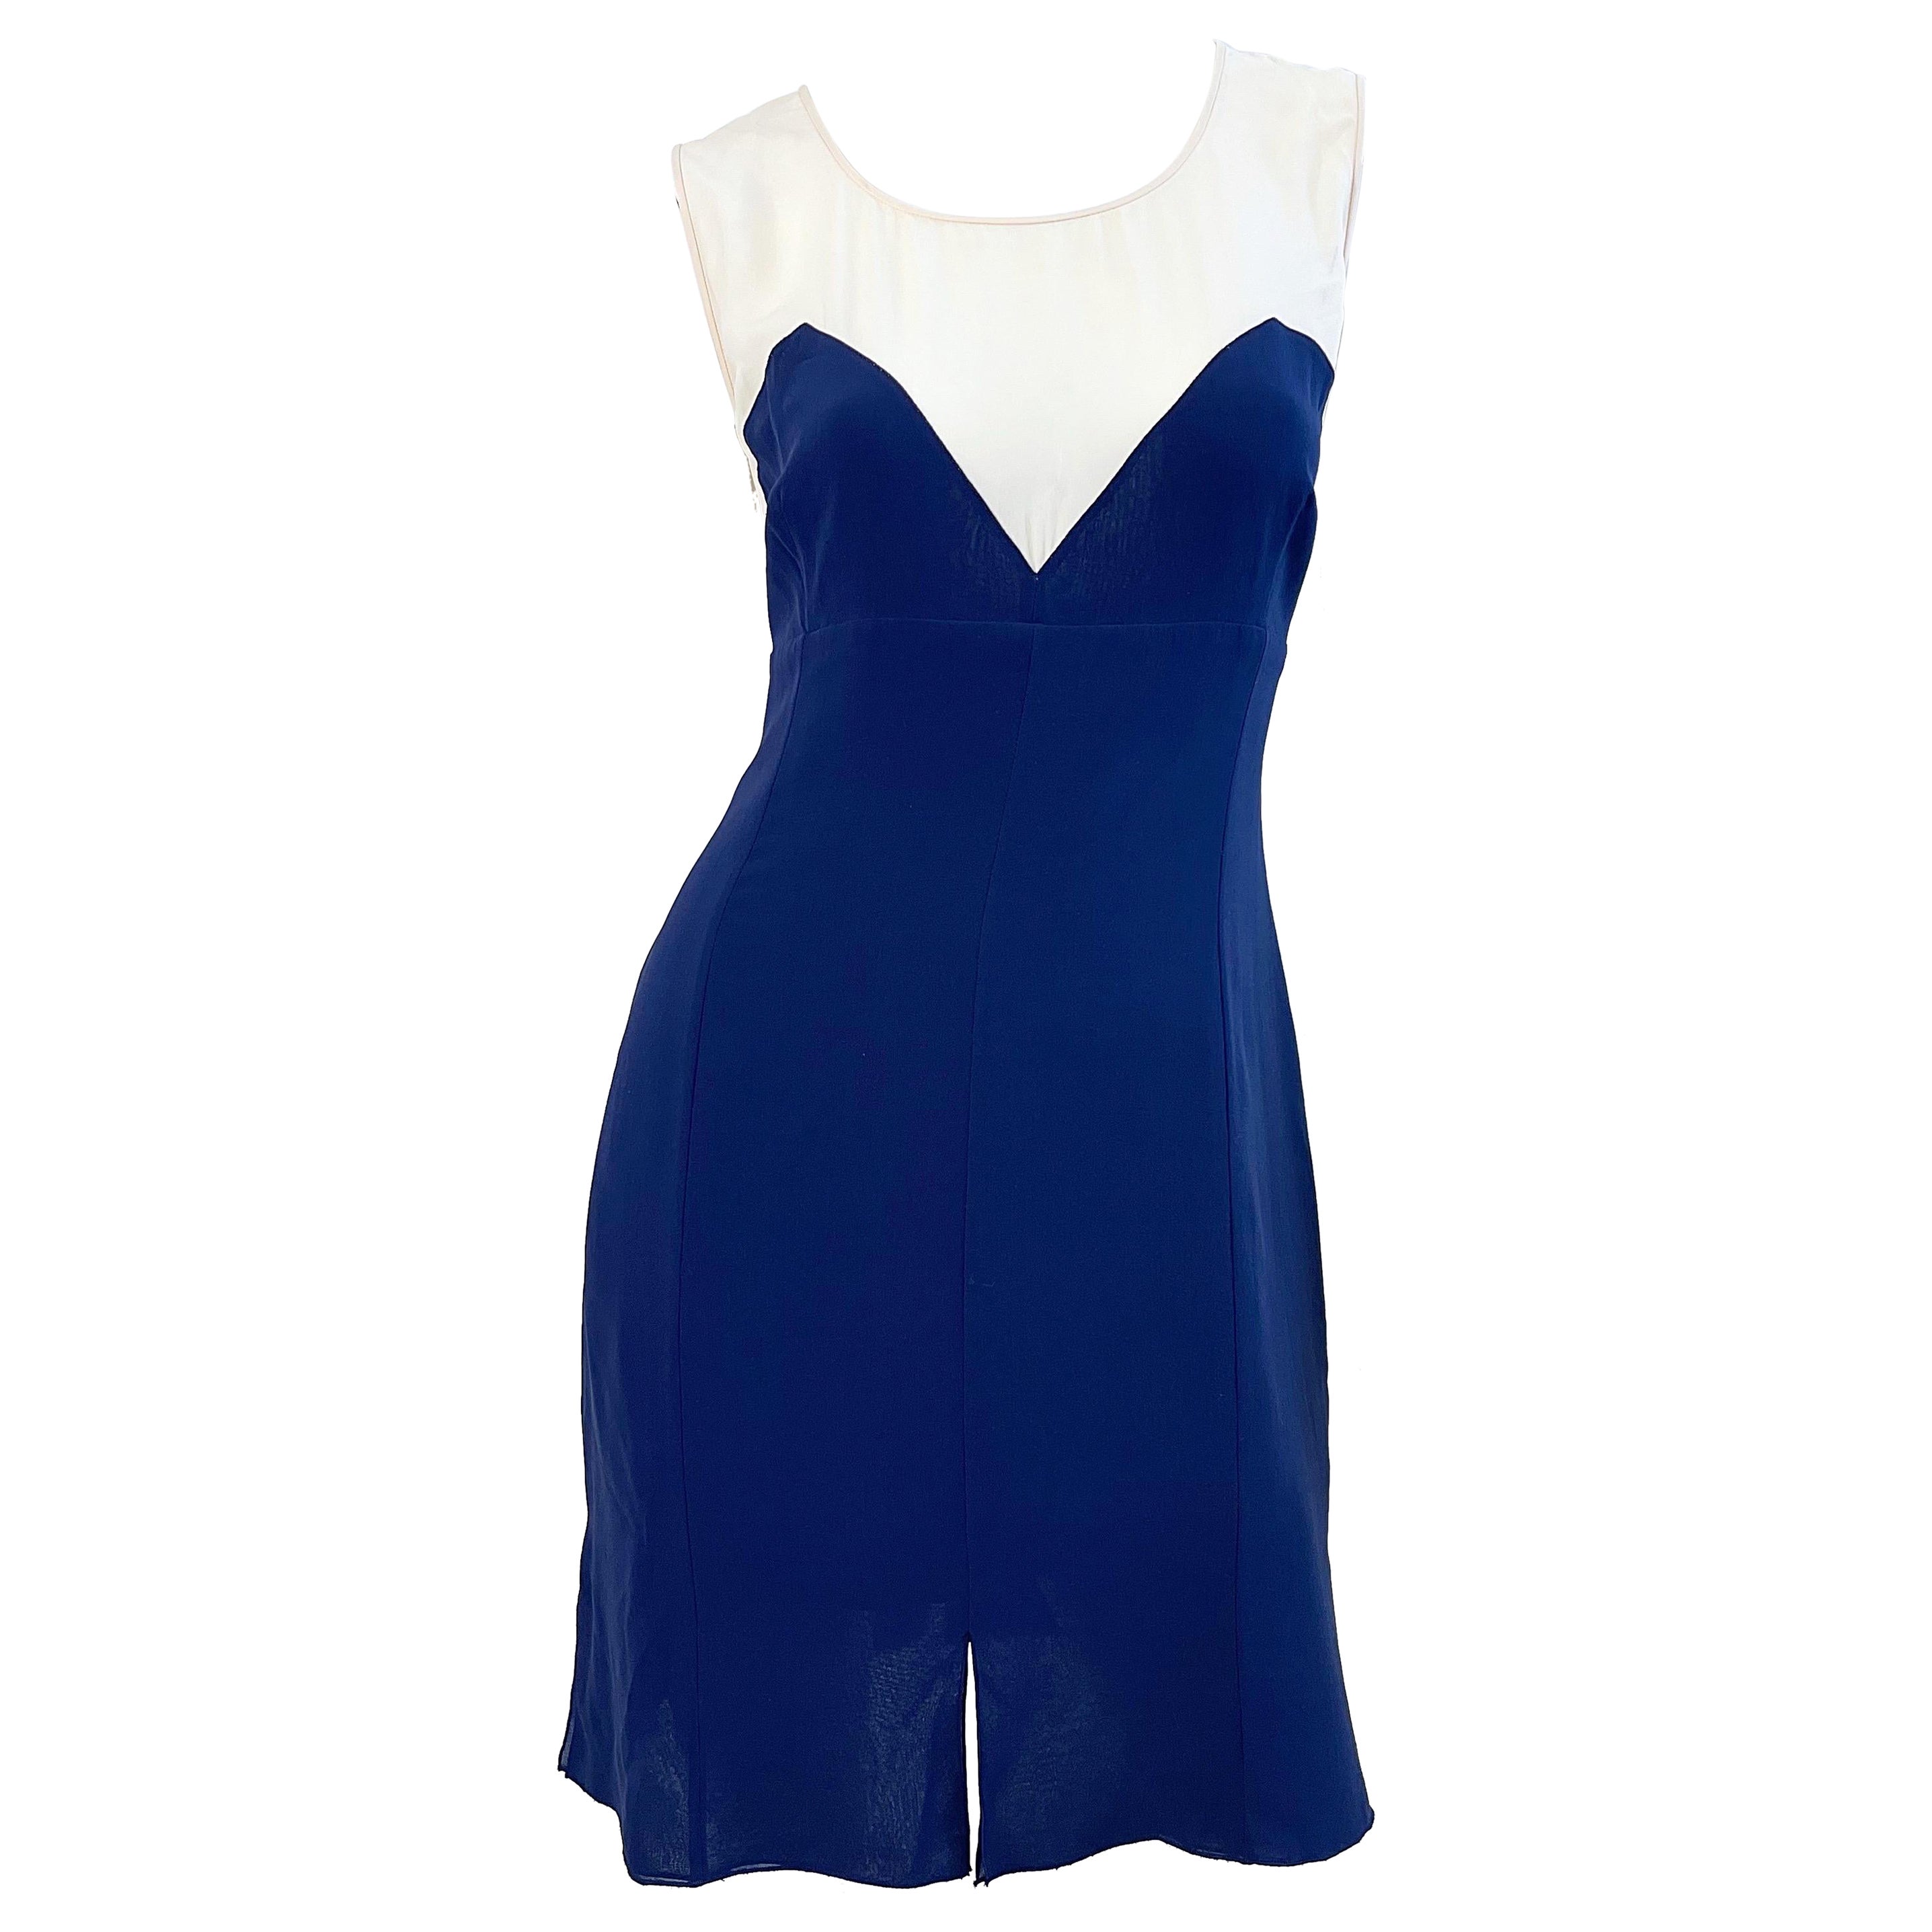 Karl Lagerfeld 1980s Size 44 / US 10 Navy Blue Silk Chiffon Vintage 80s Dress For Sale